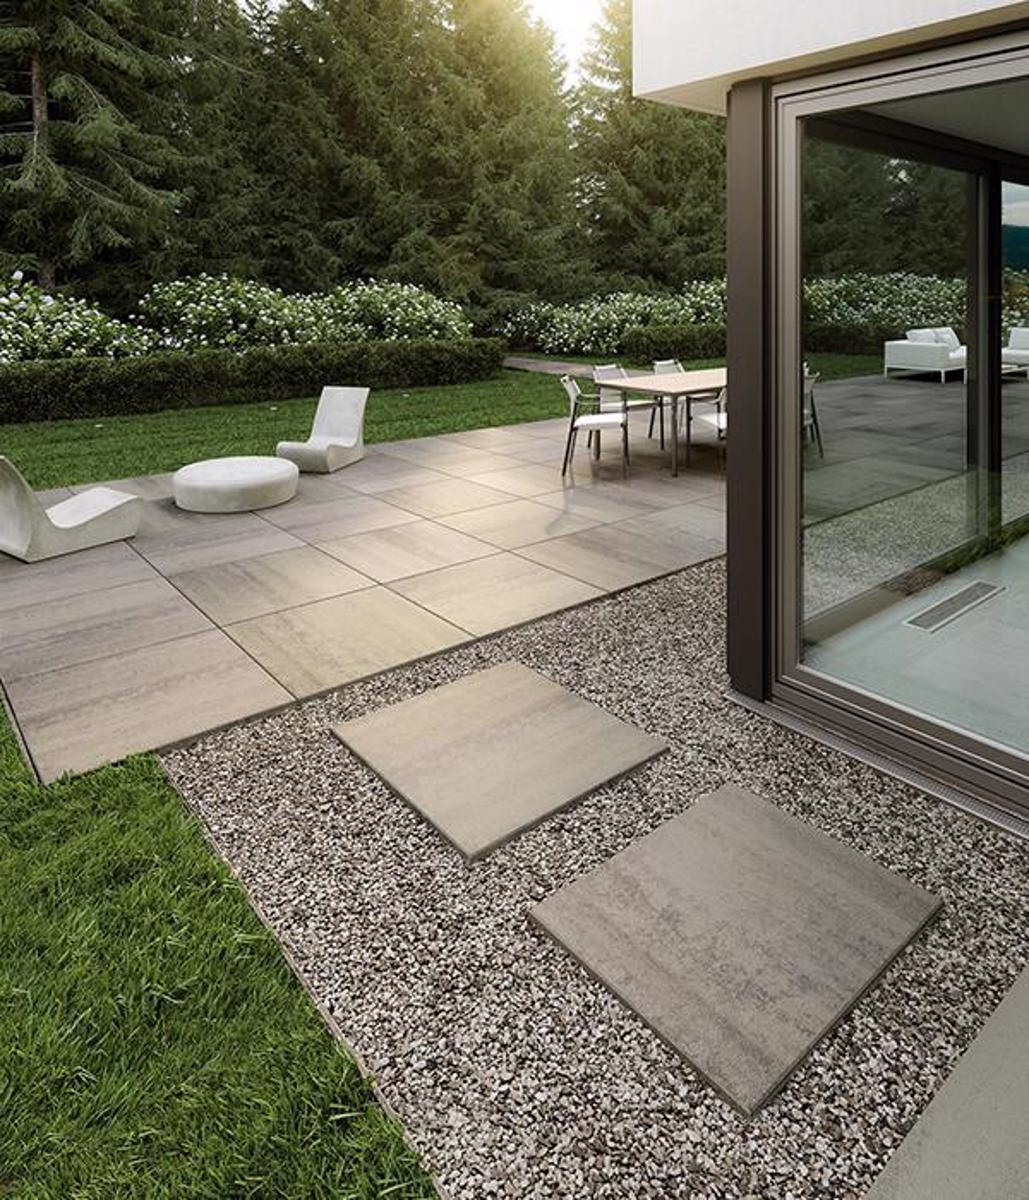 Techo bloc backyard walkway patio large pavers grey industria900 600x700